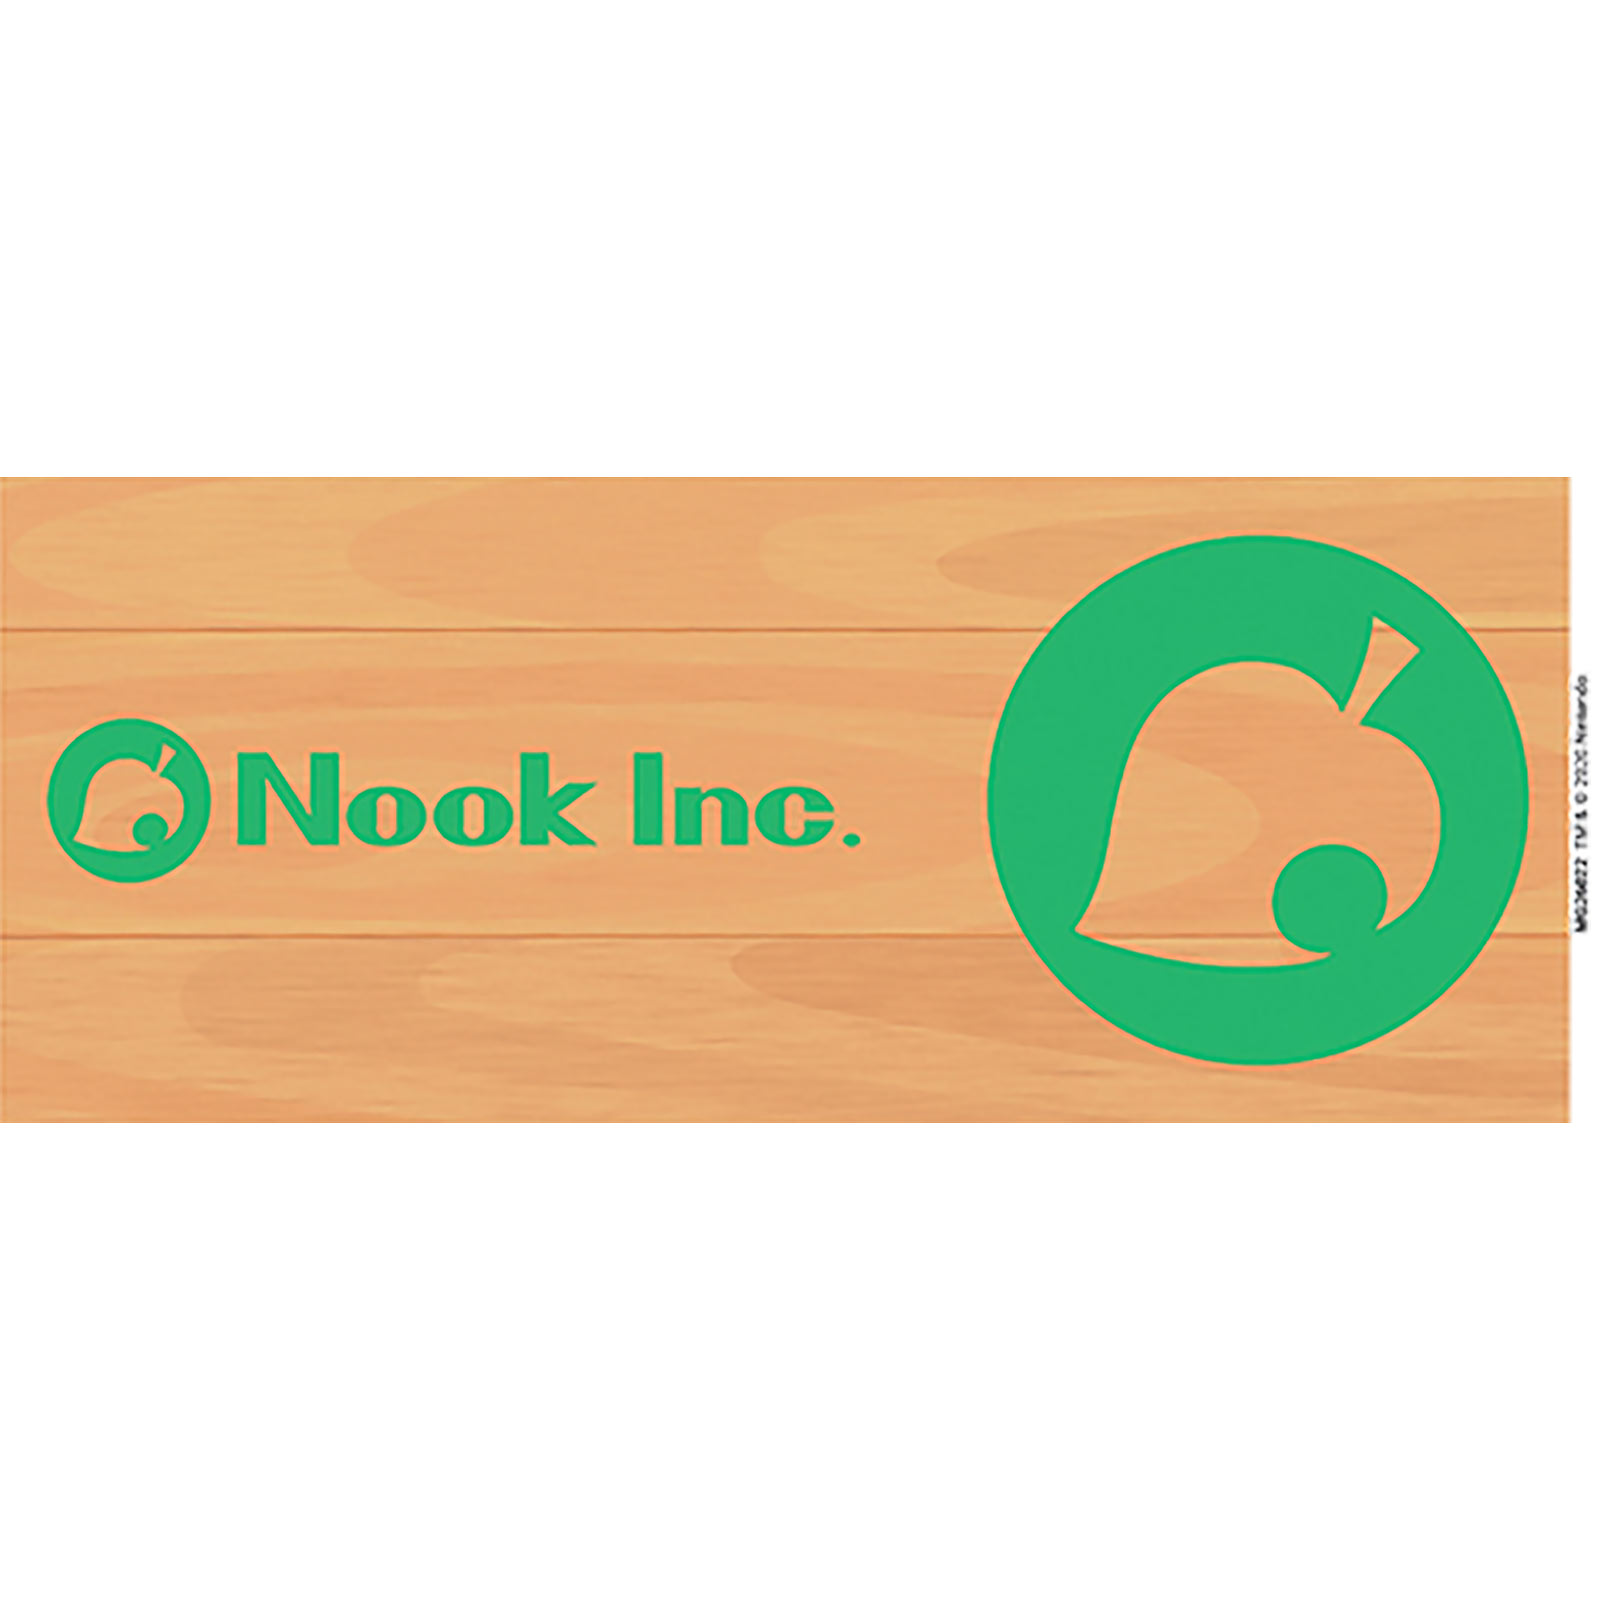 Animal Crossing - Nook Inc. Mug